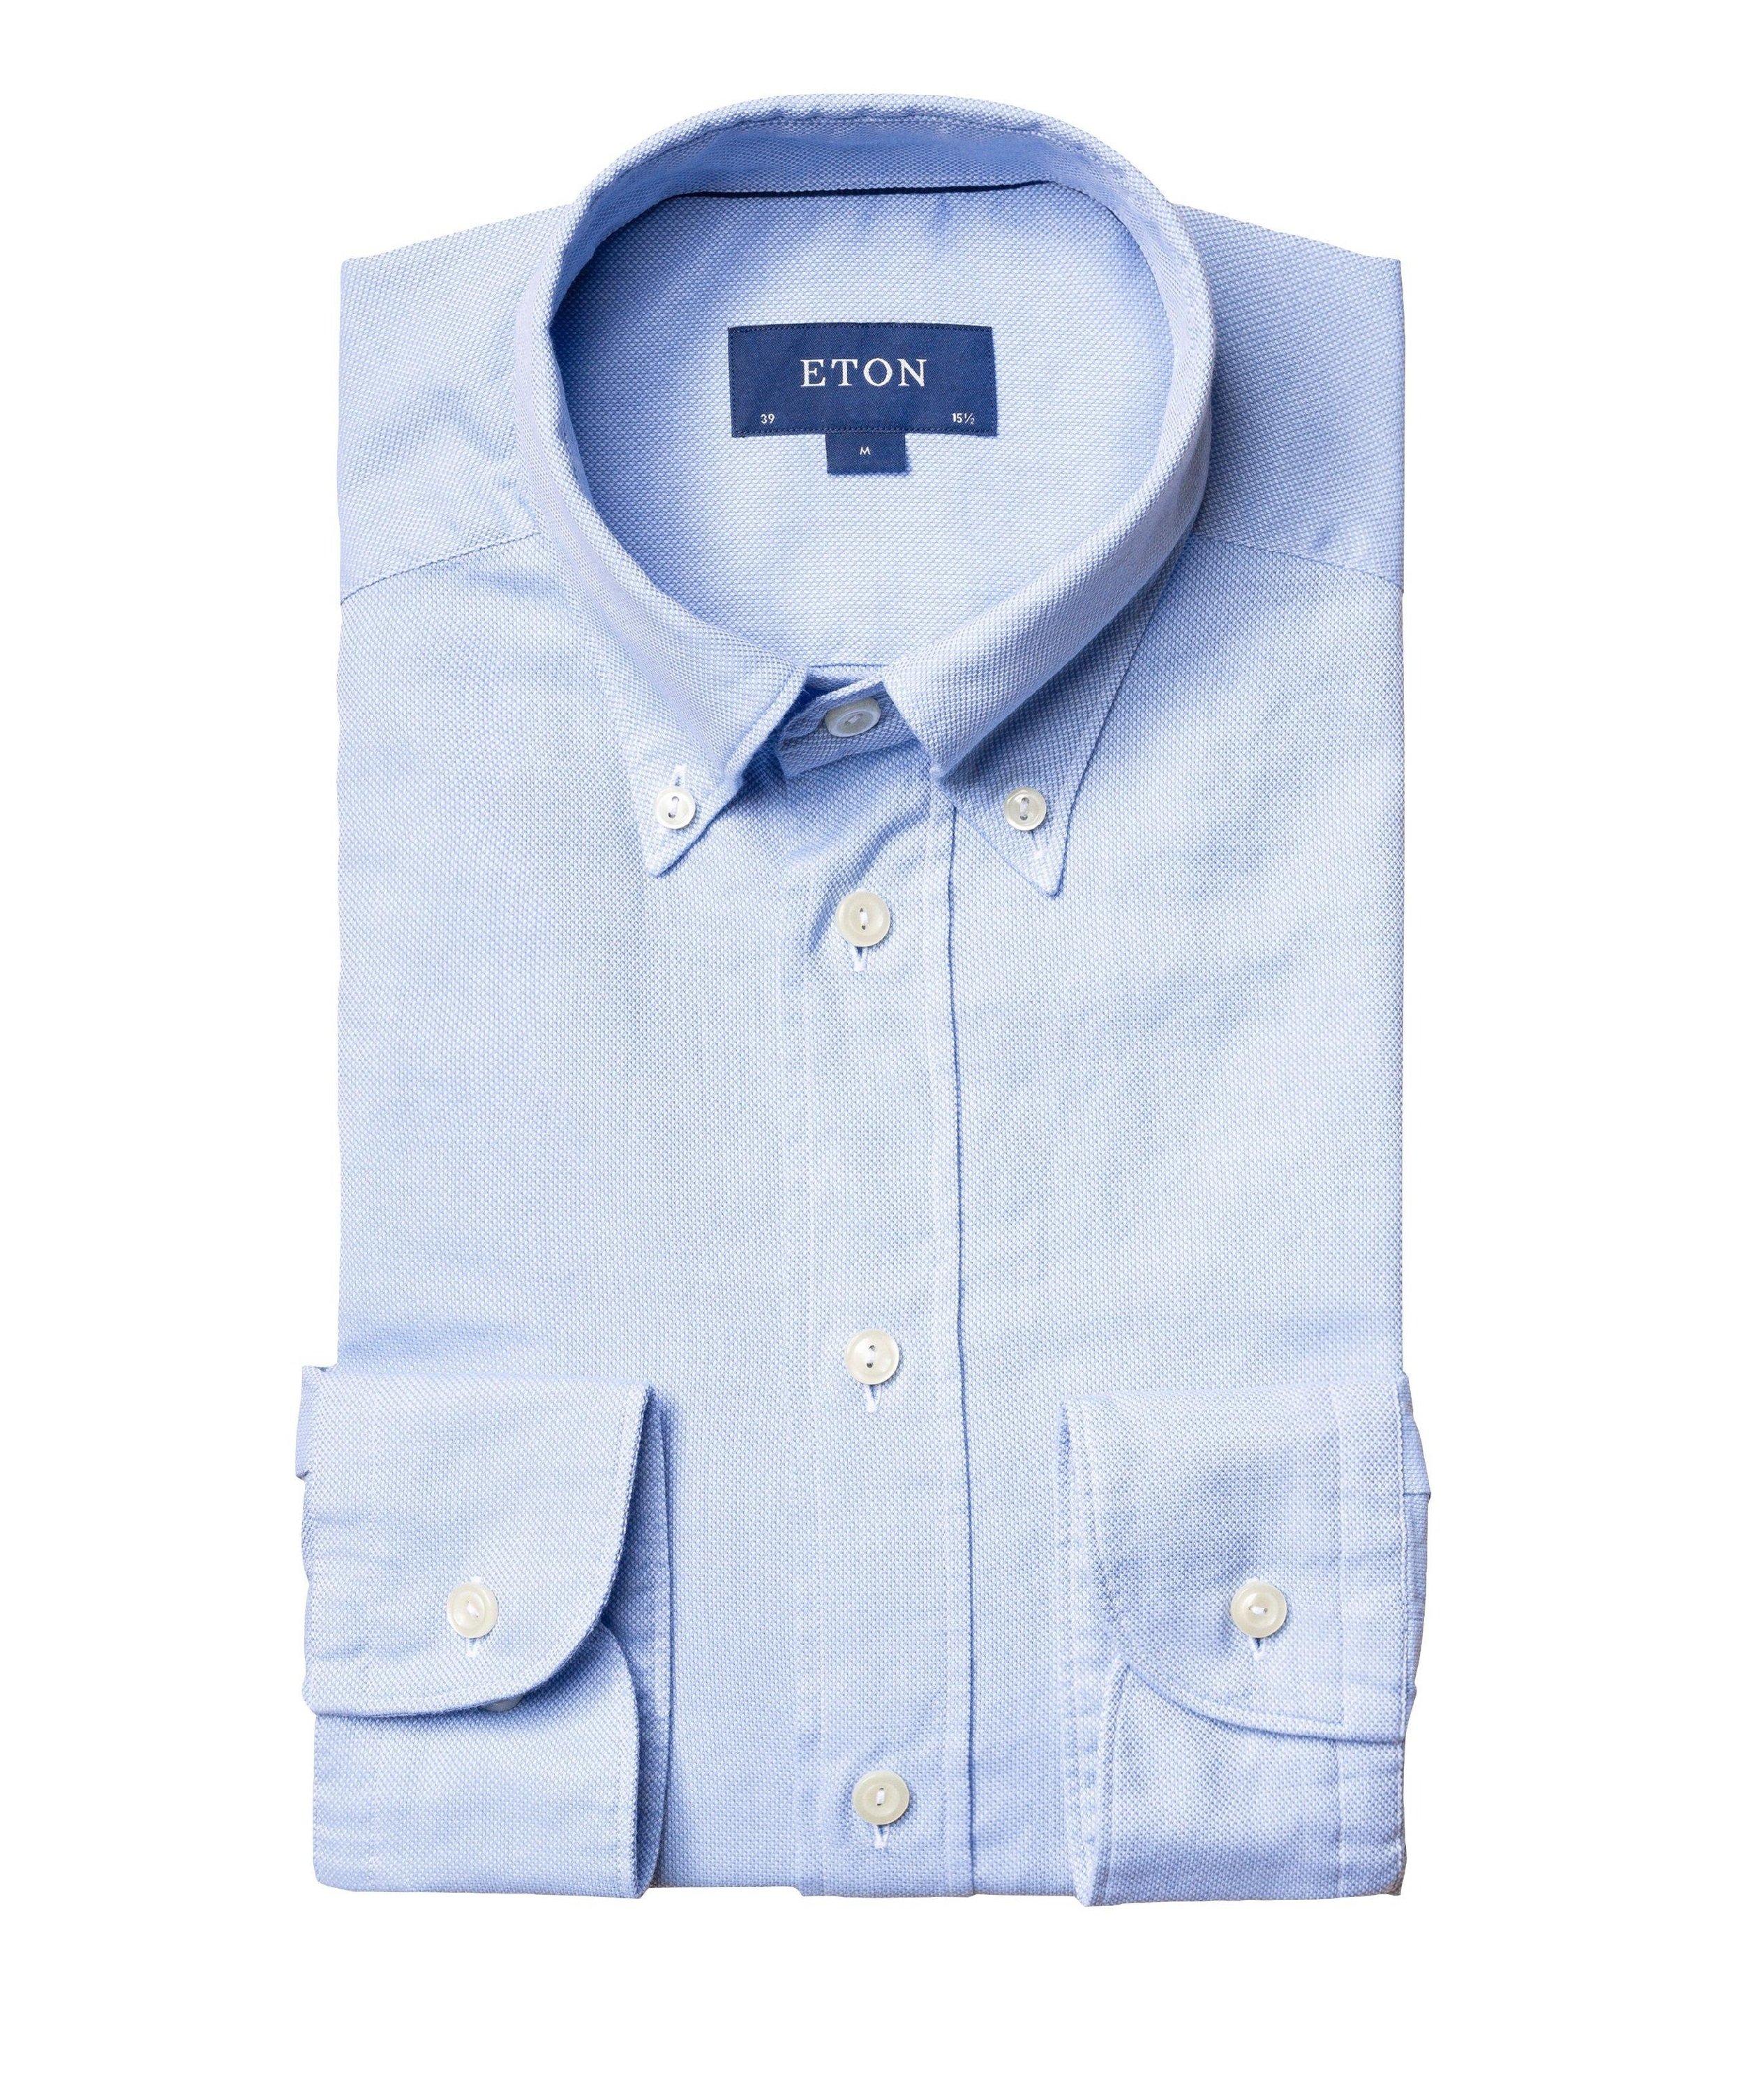 Soft Slim Fit Oxford Shirt image 0